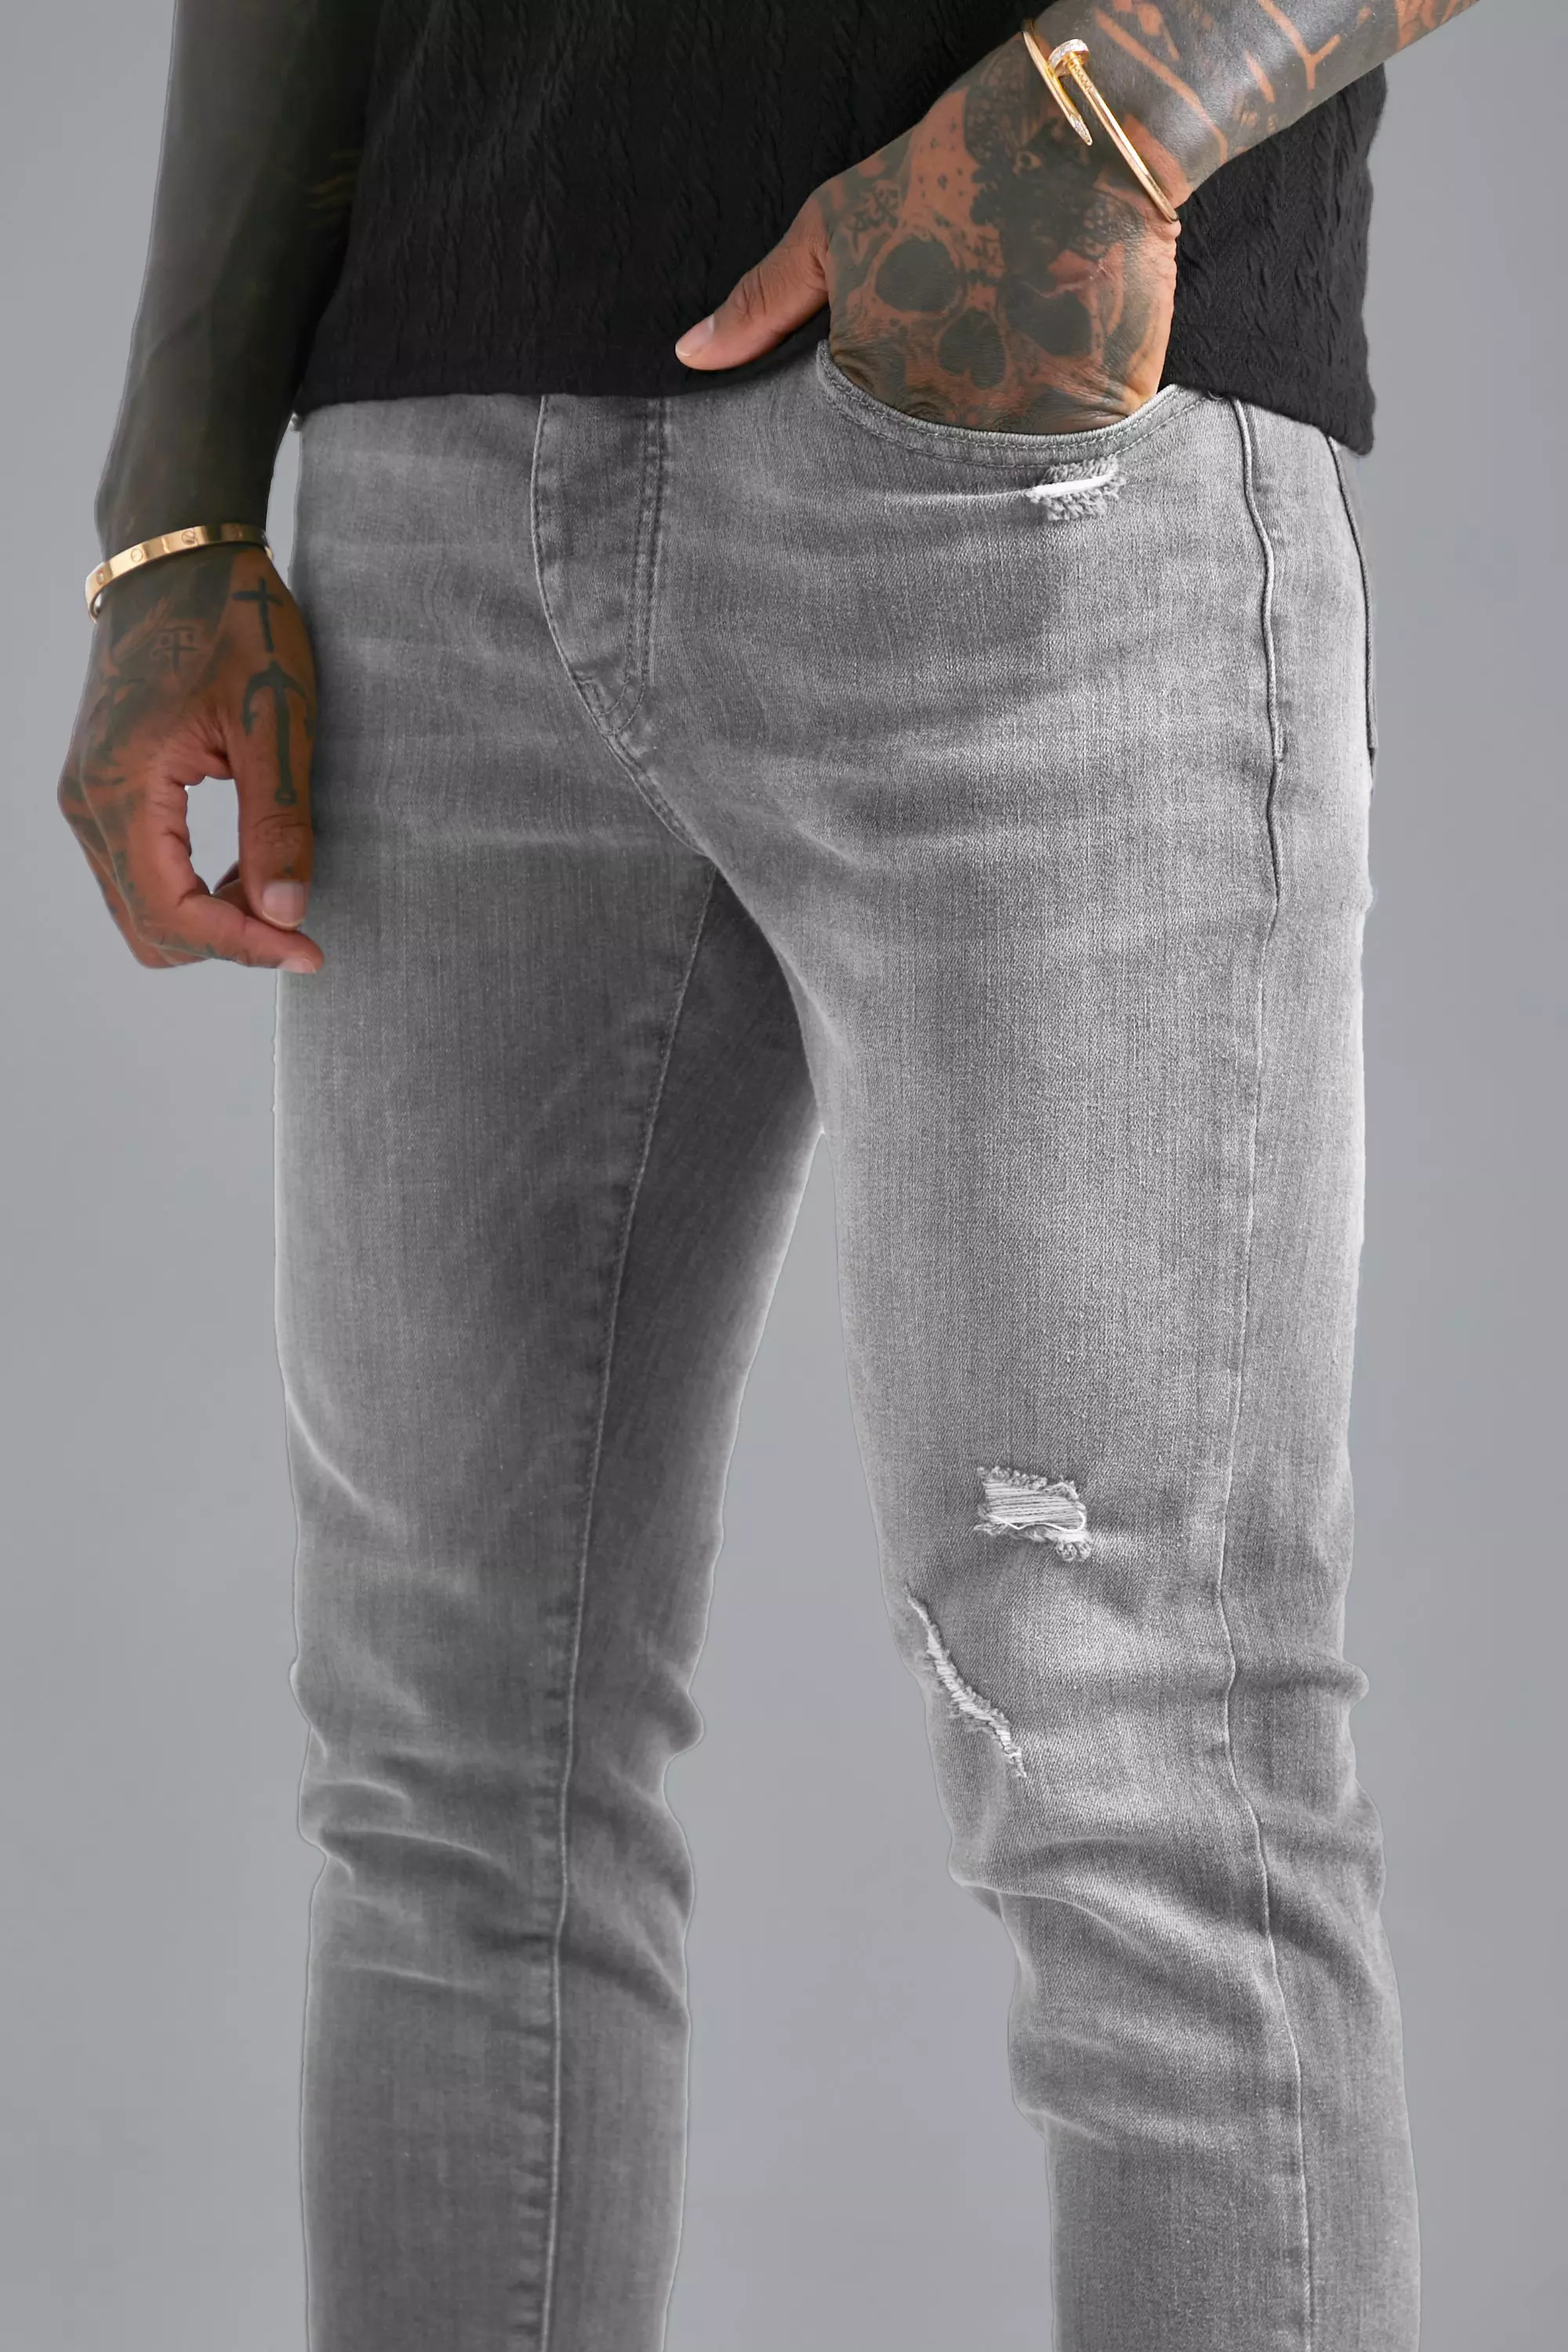 J Brand Grey Ripped Denim Distressed Hem Skinny Jeans M Waist 29 J Brand